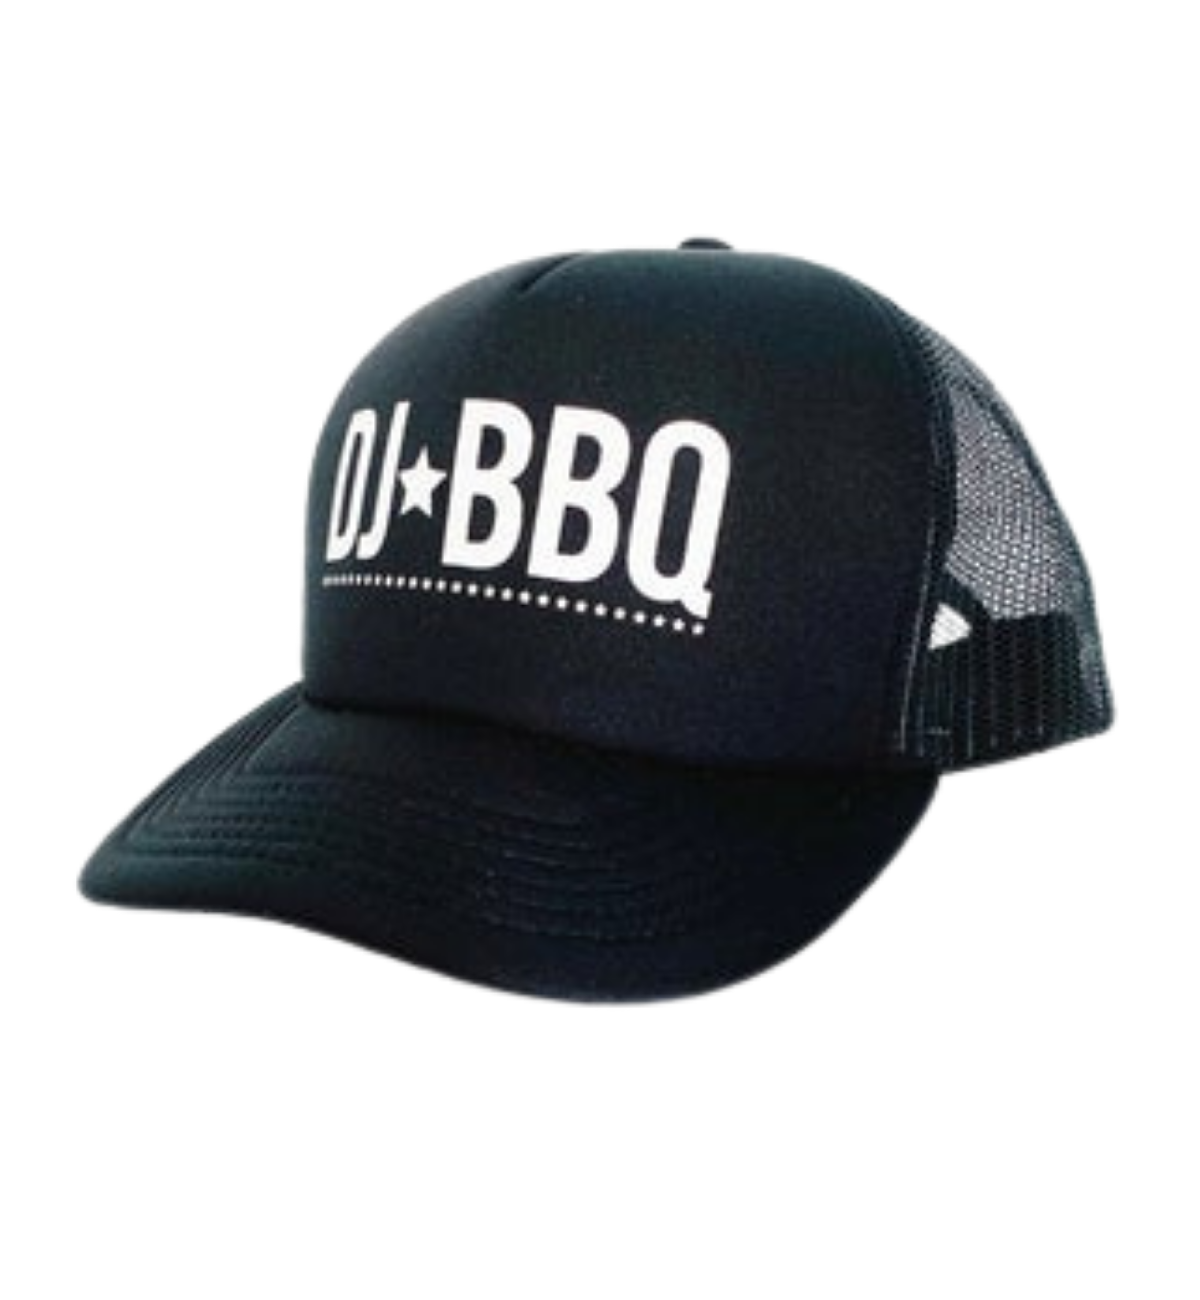 DJ BBQ Stars Logo Snapback Trucker Cap Black – Bright and Shine